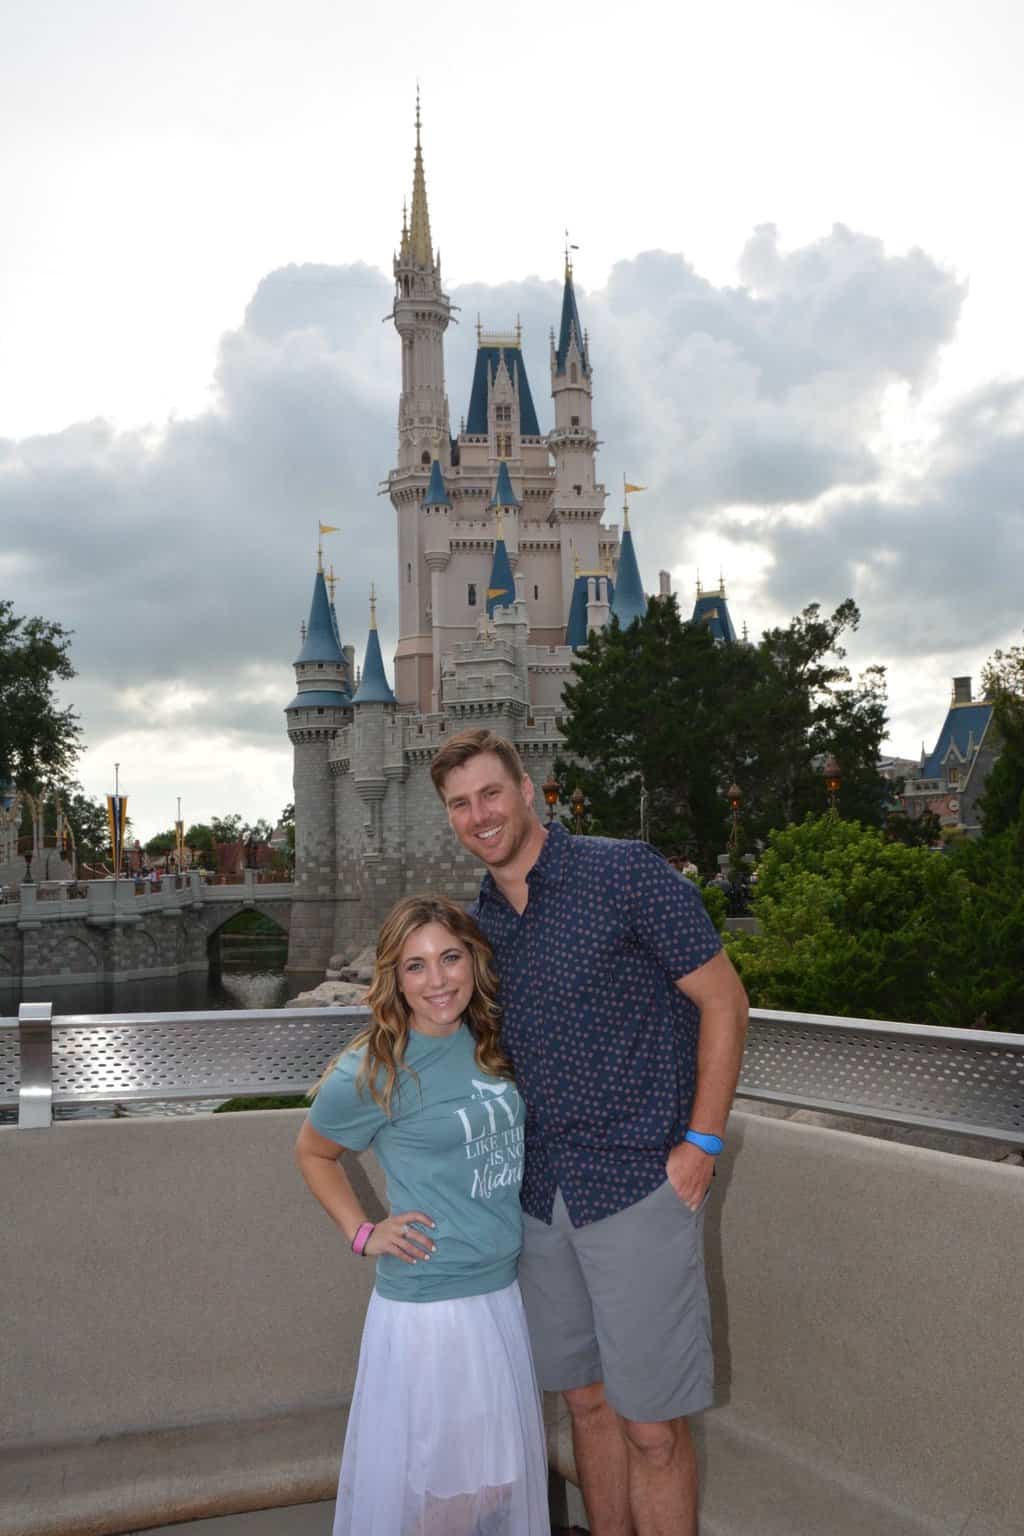 Best Place for Castle Pics at Disney